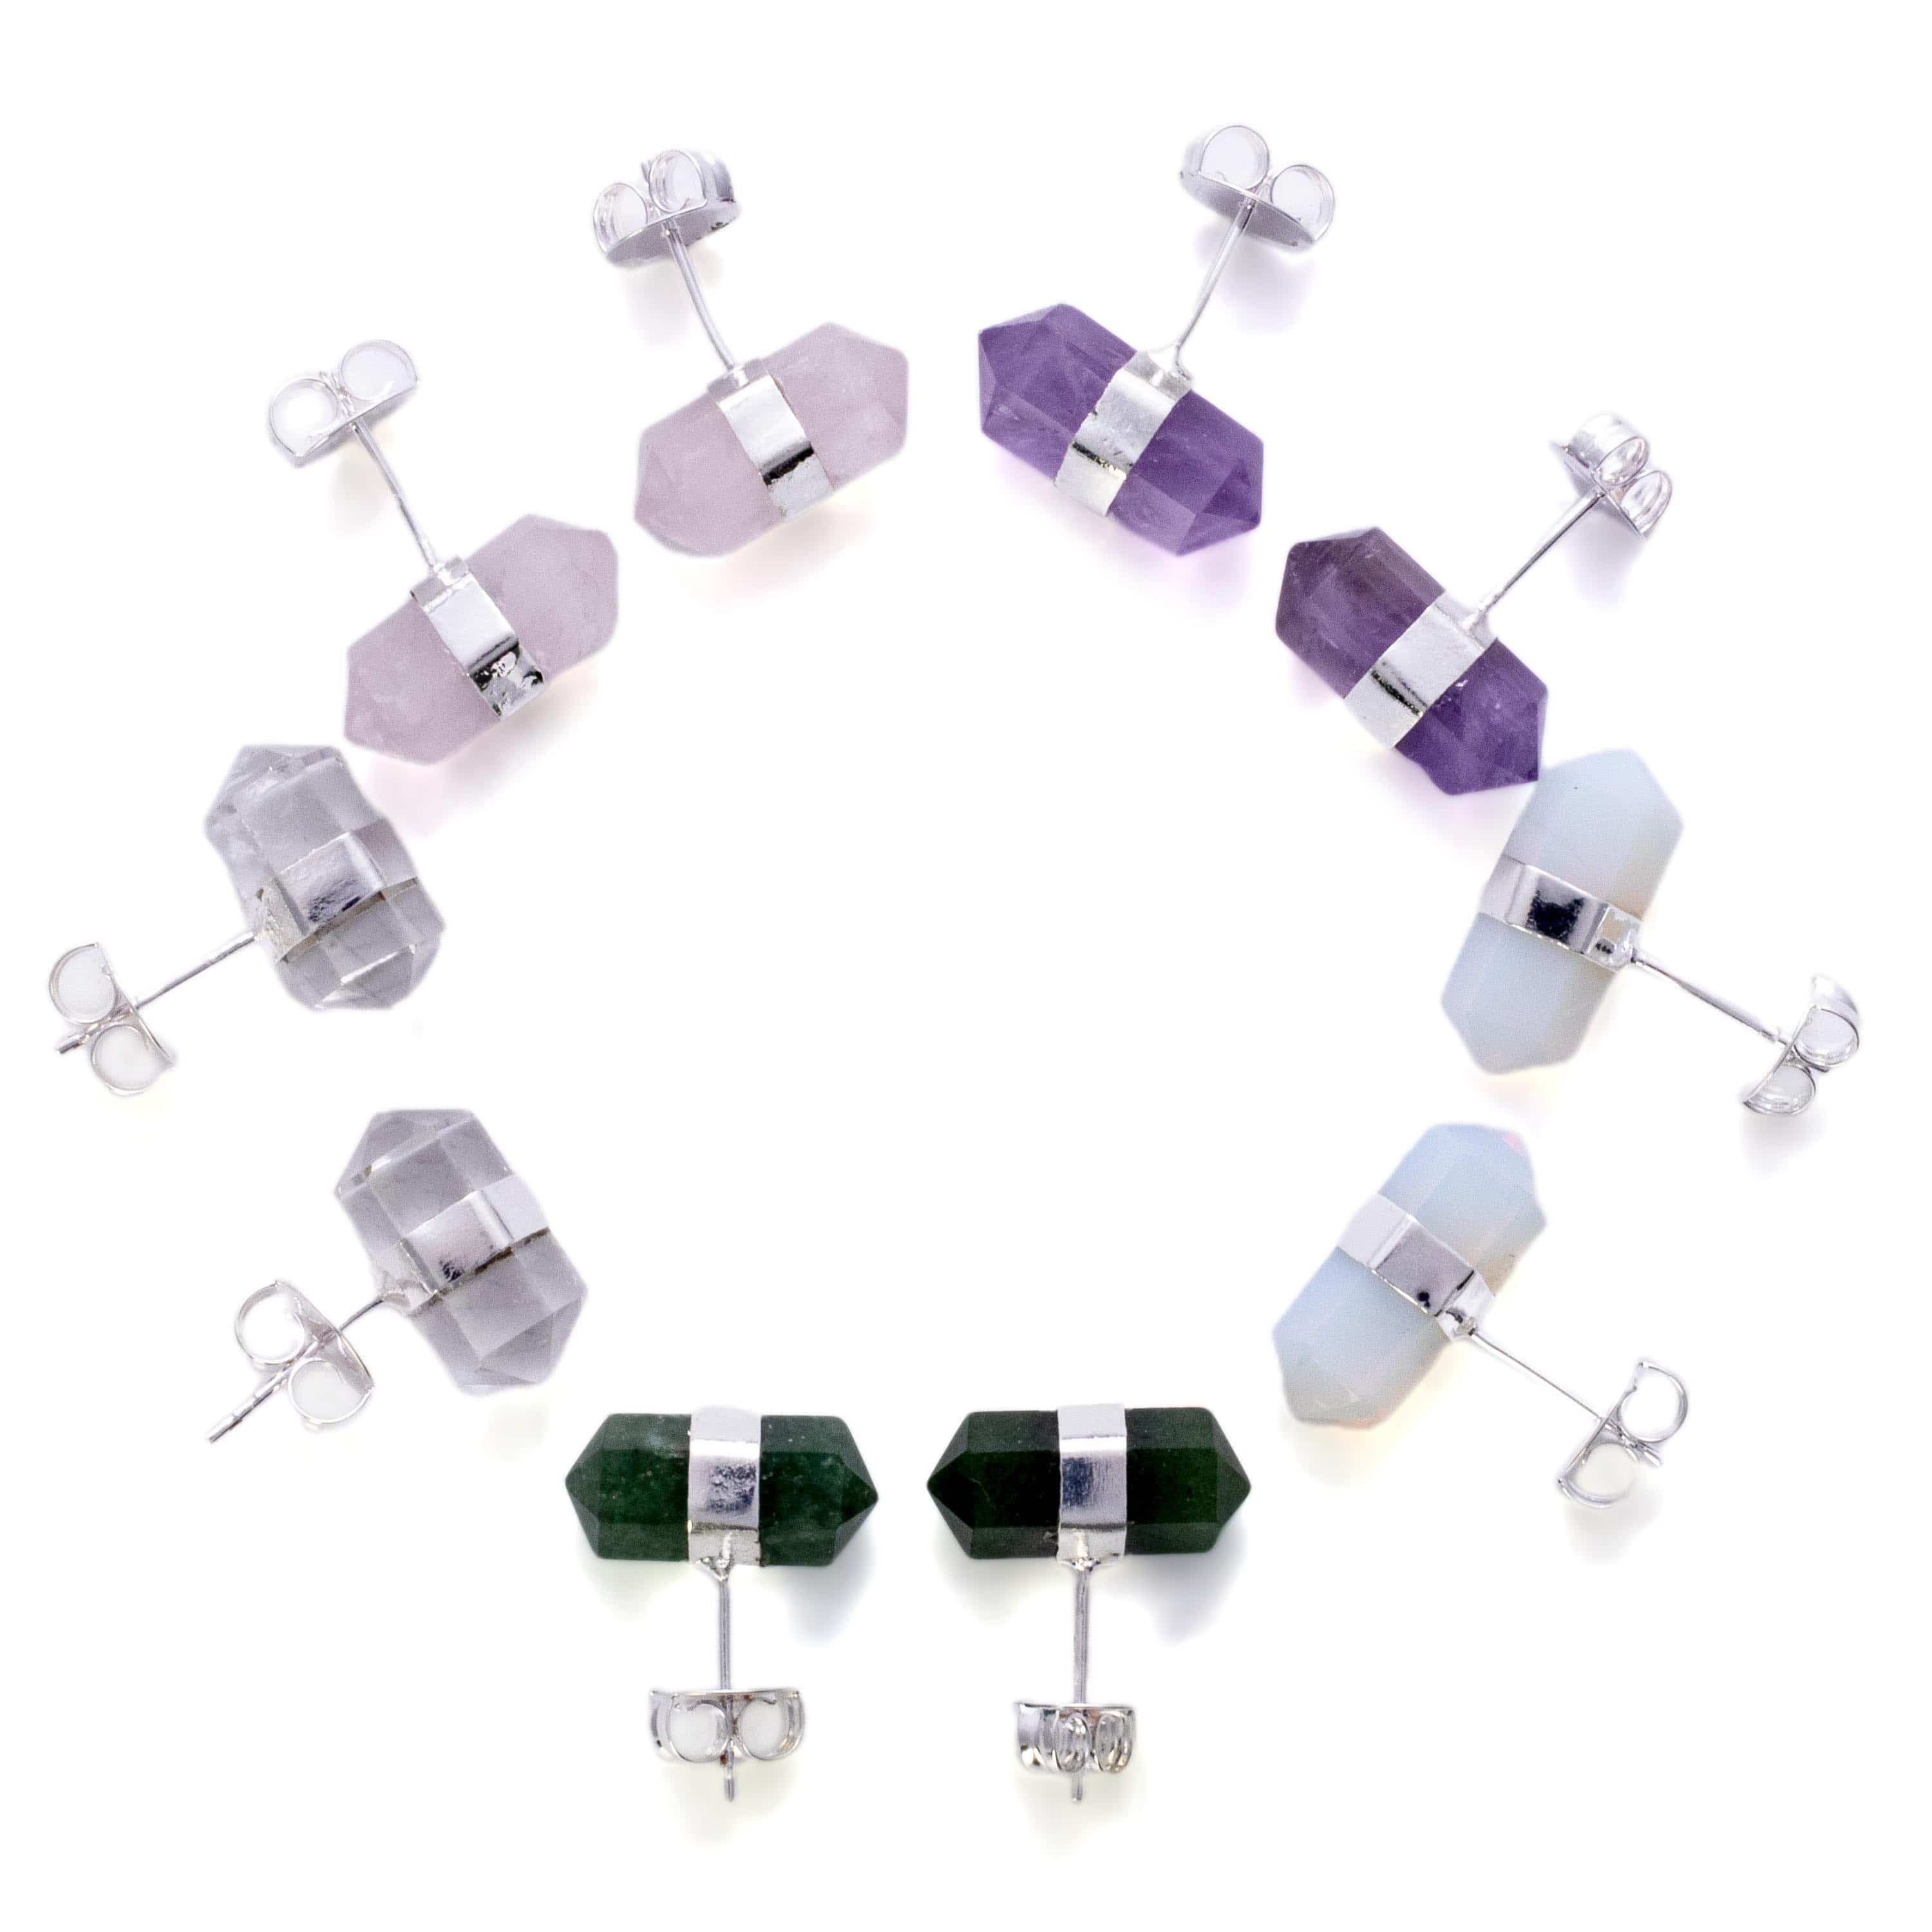 Kalifano Crystal Jewelry Clear Quartz Stud Earrings CJE-1516-QZ